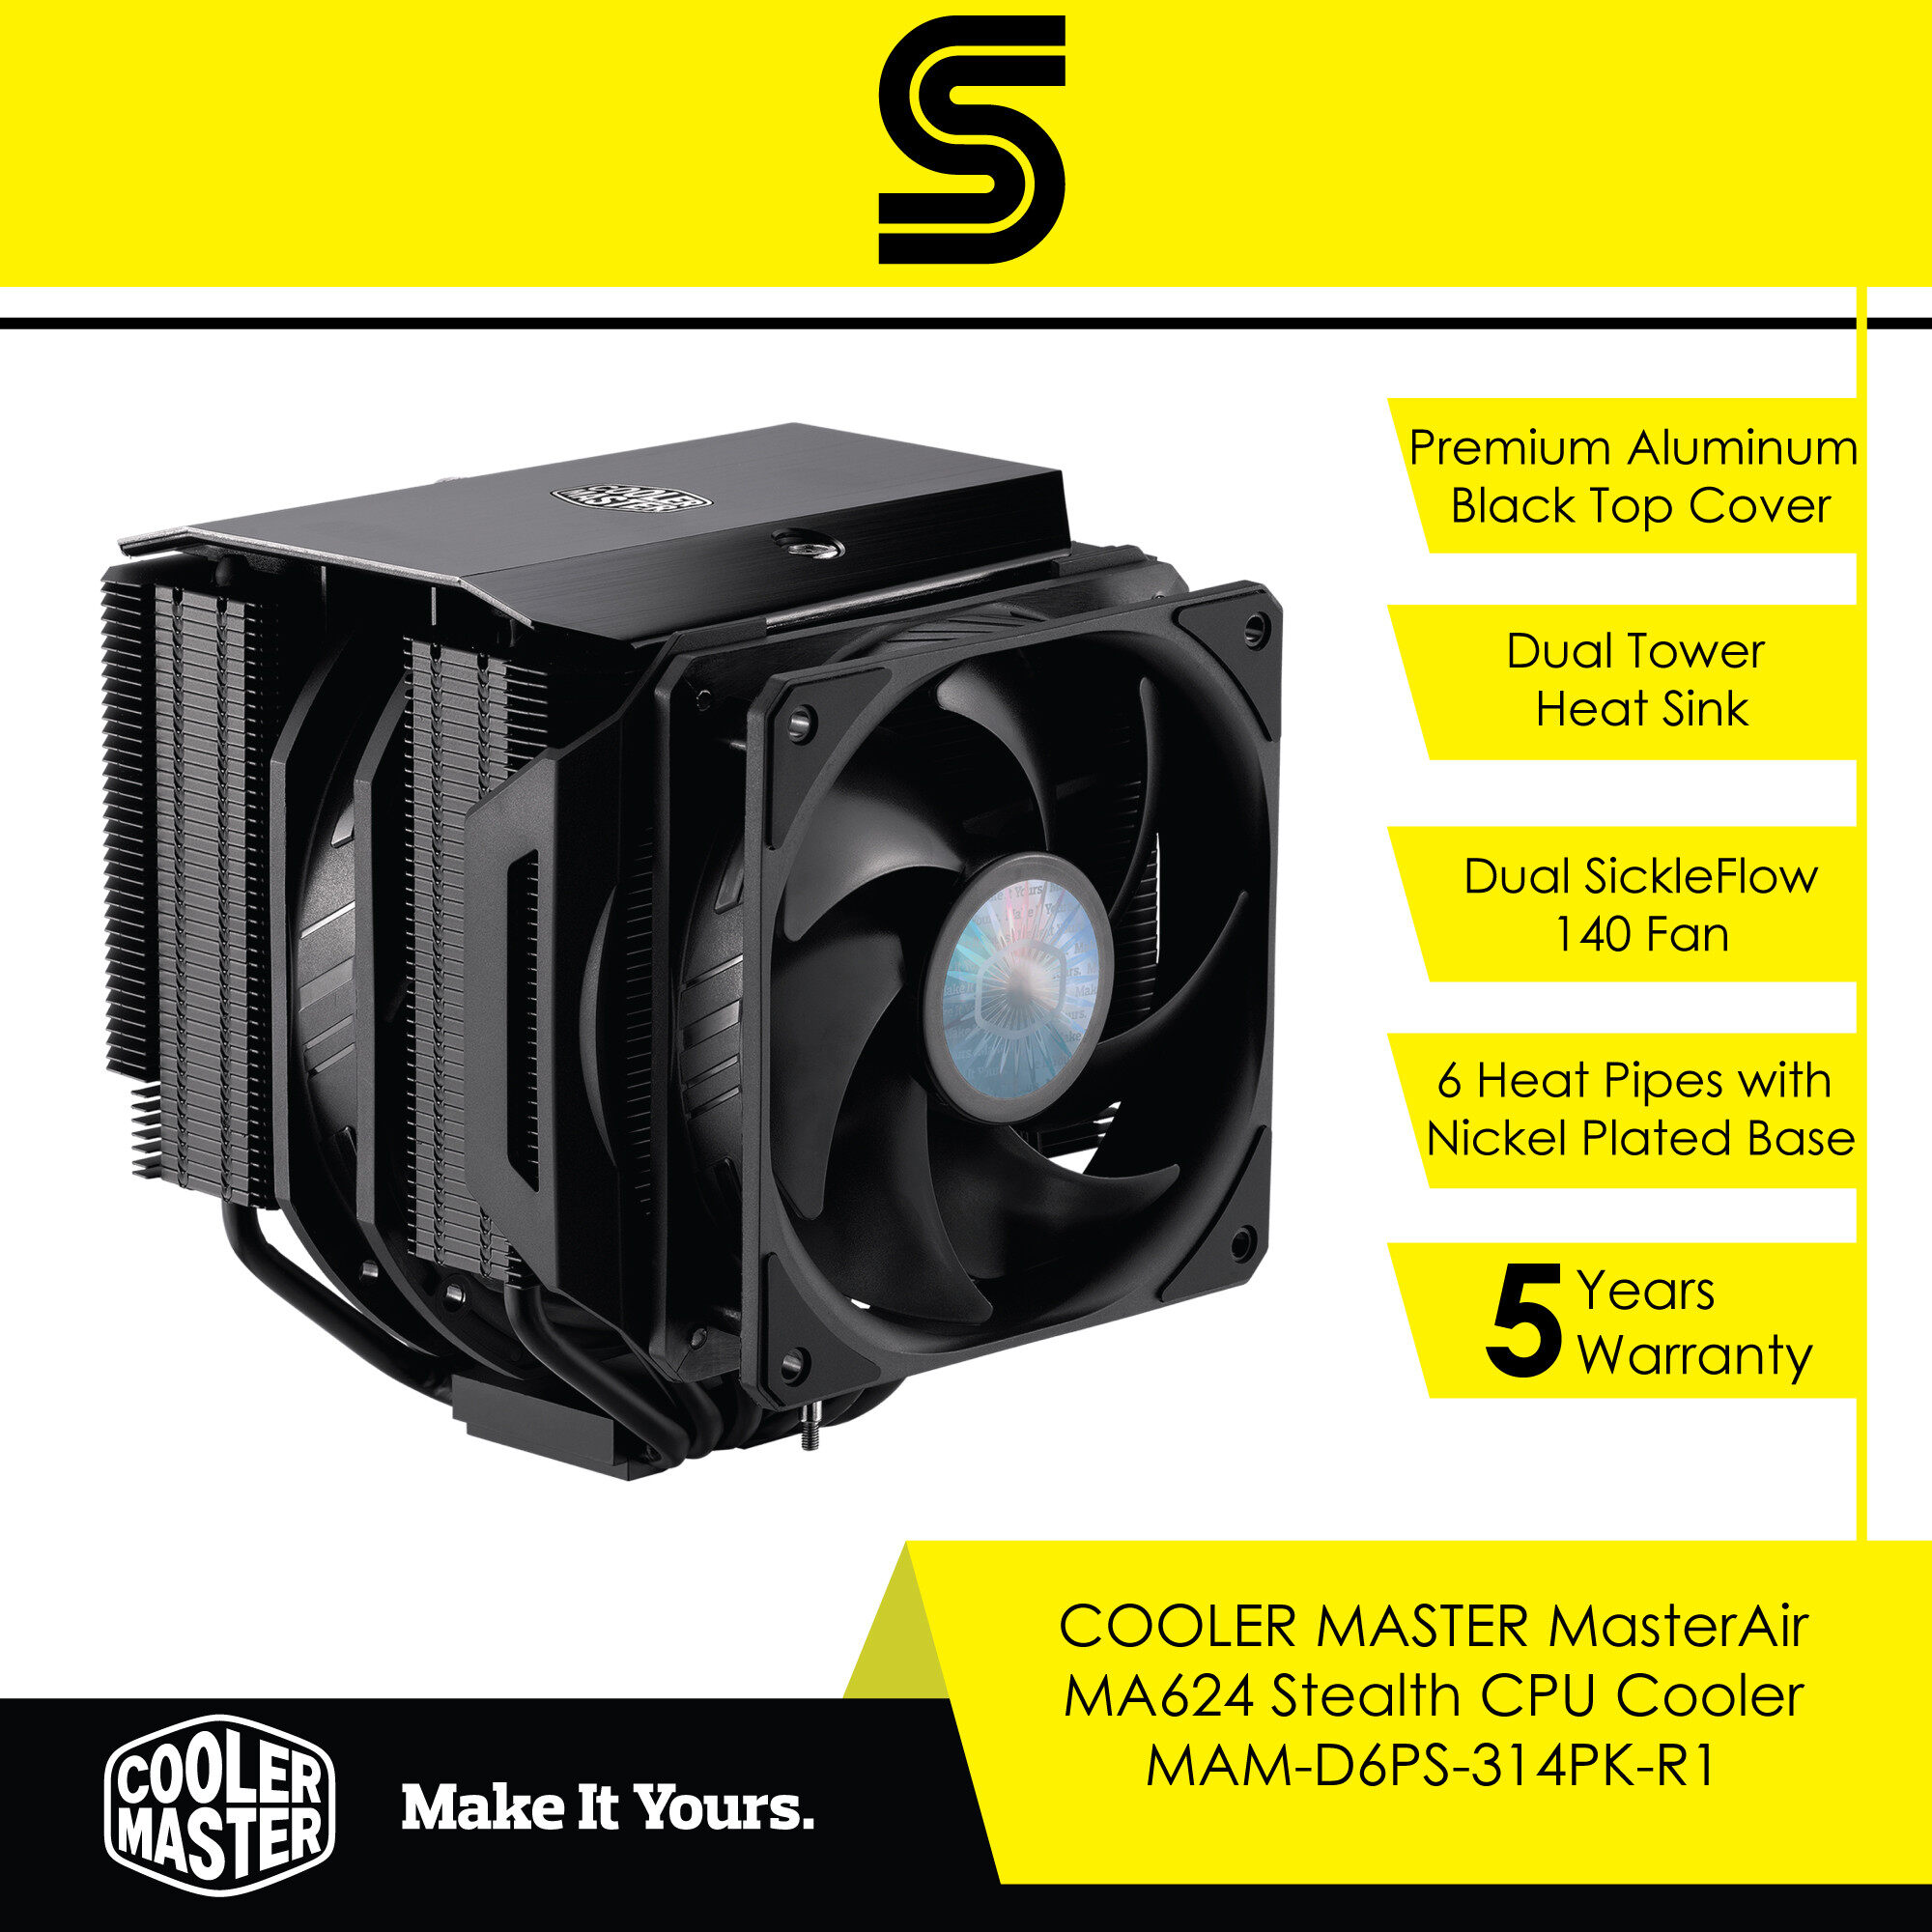 COOLER MASTER MasterAir MA624 Stealth CPU Cooler - MAM-D6PS-314PK-R1